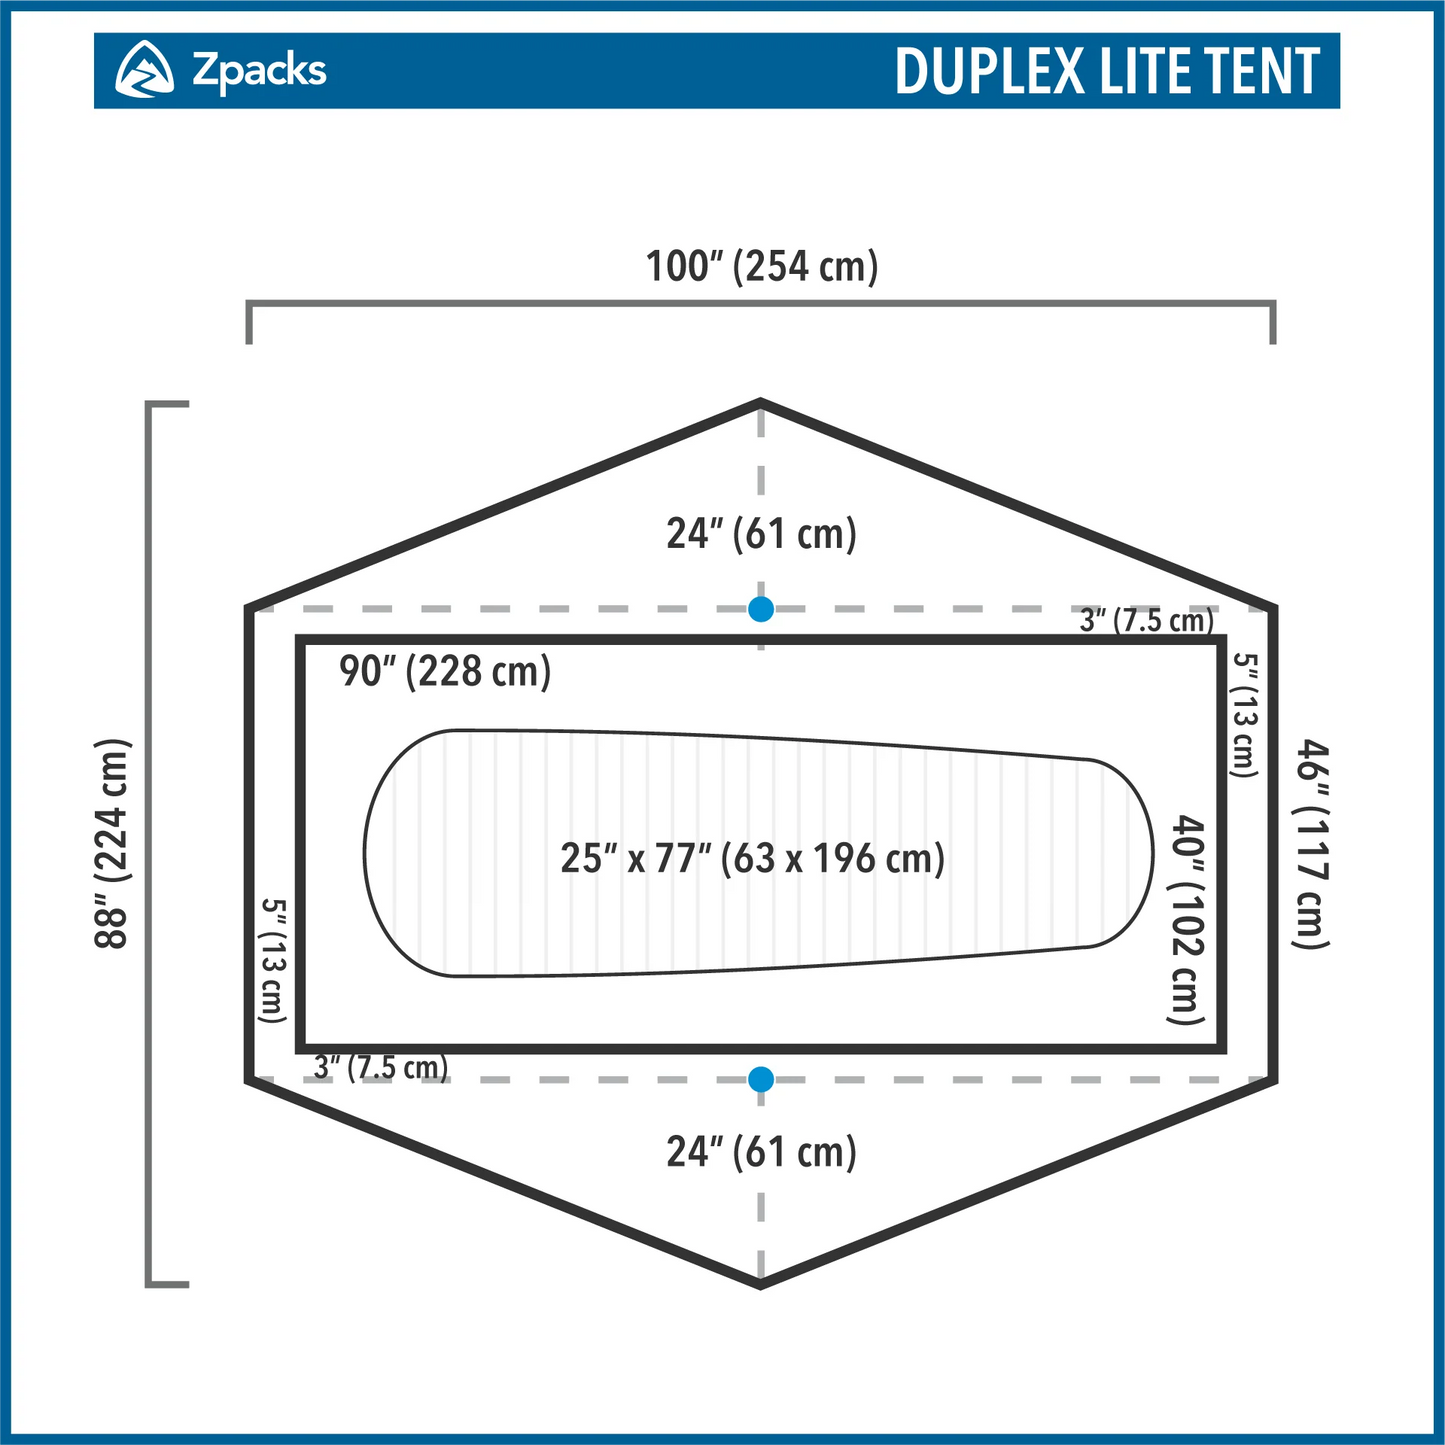 Zpacks - Duplex Lite